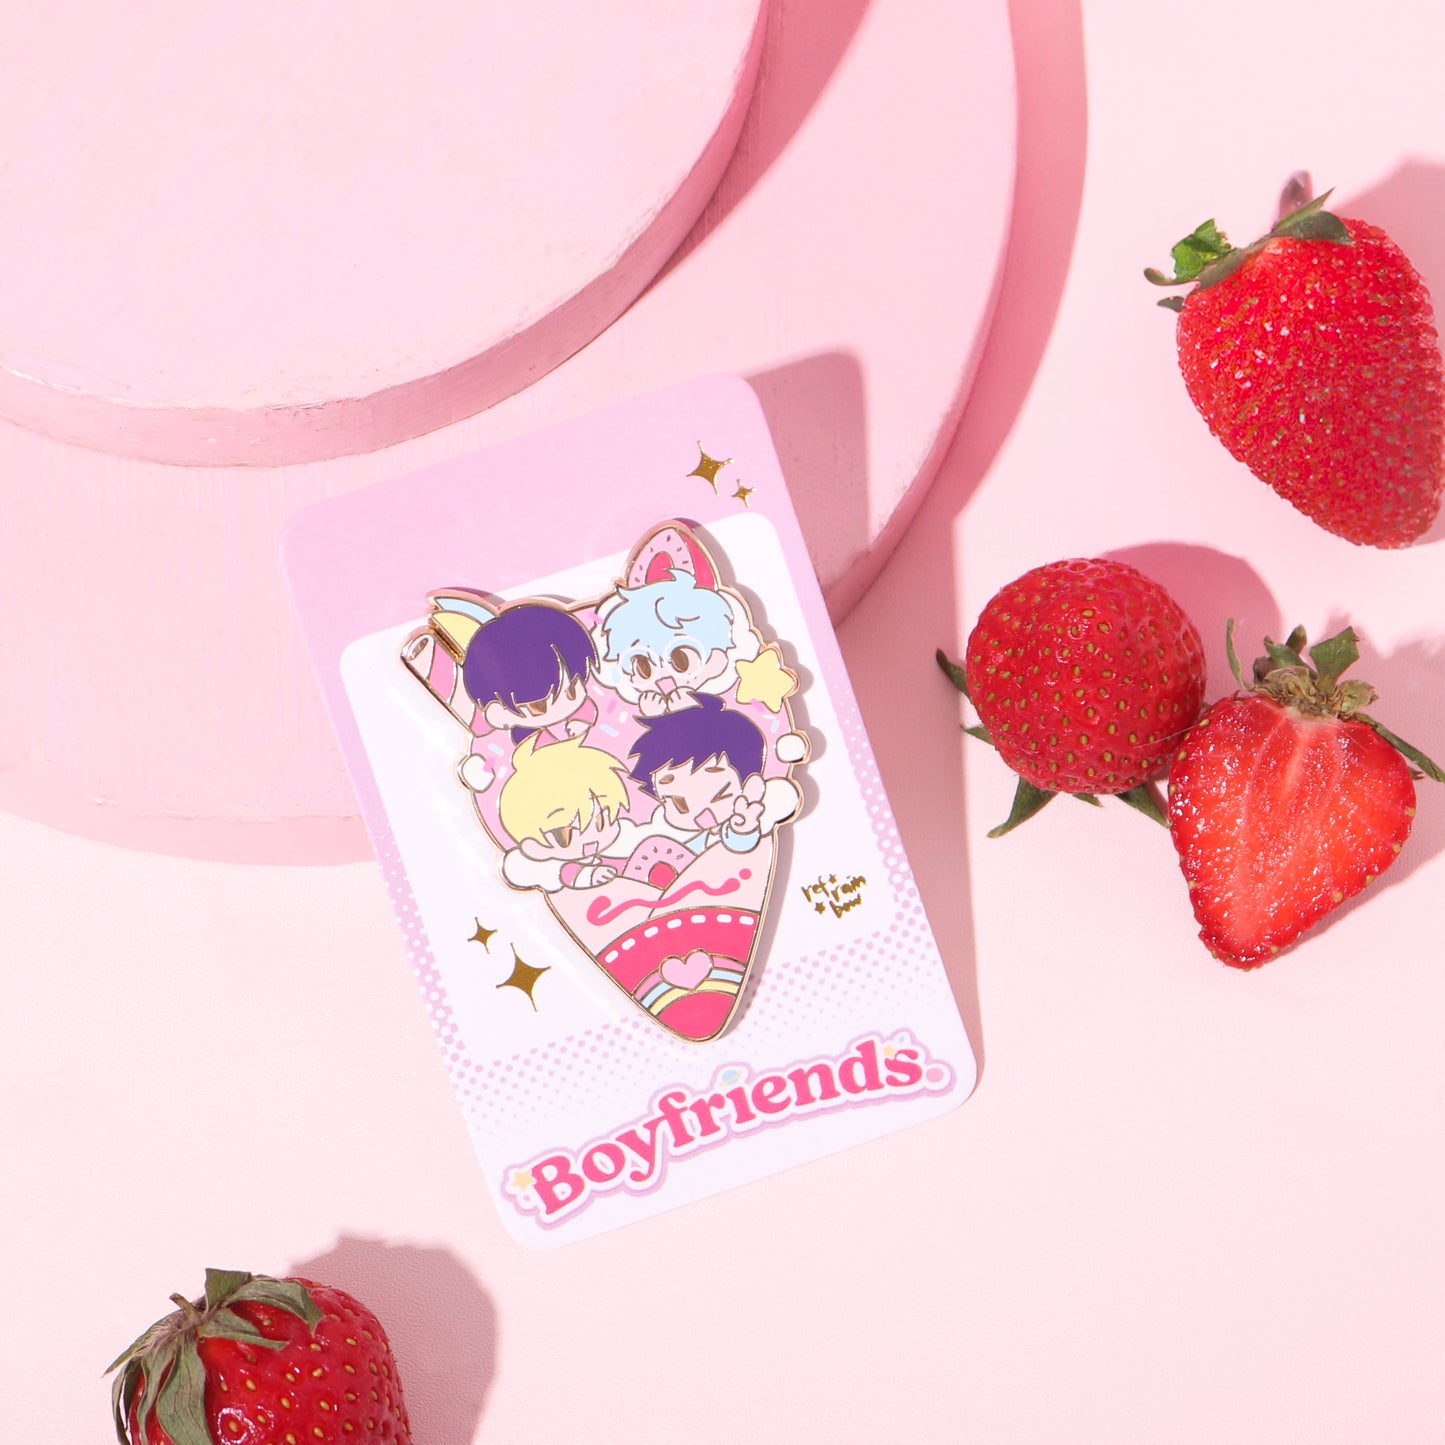 Boyfriends Vol. 1 [Bundle]